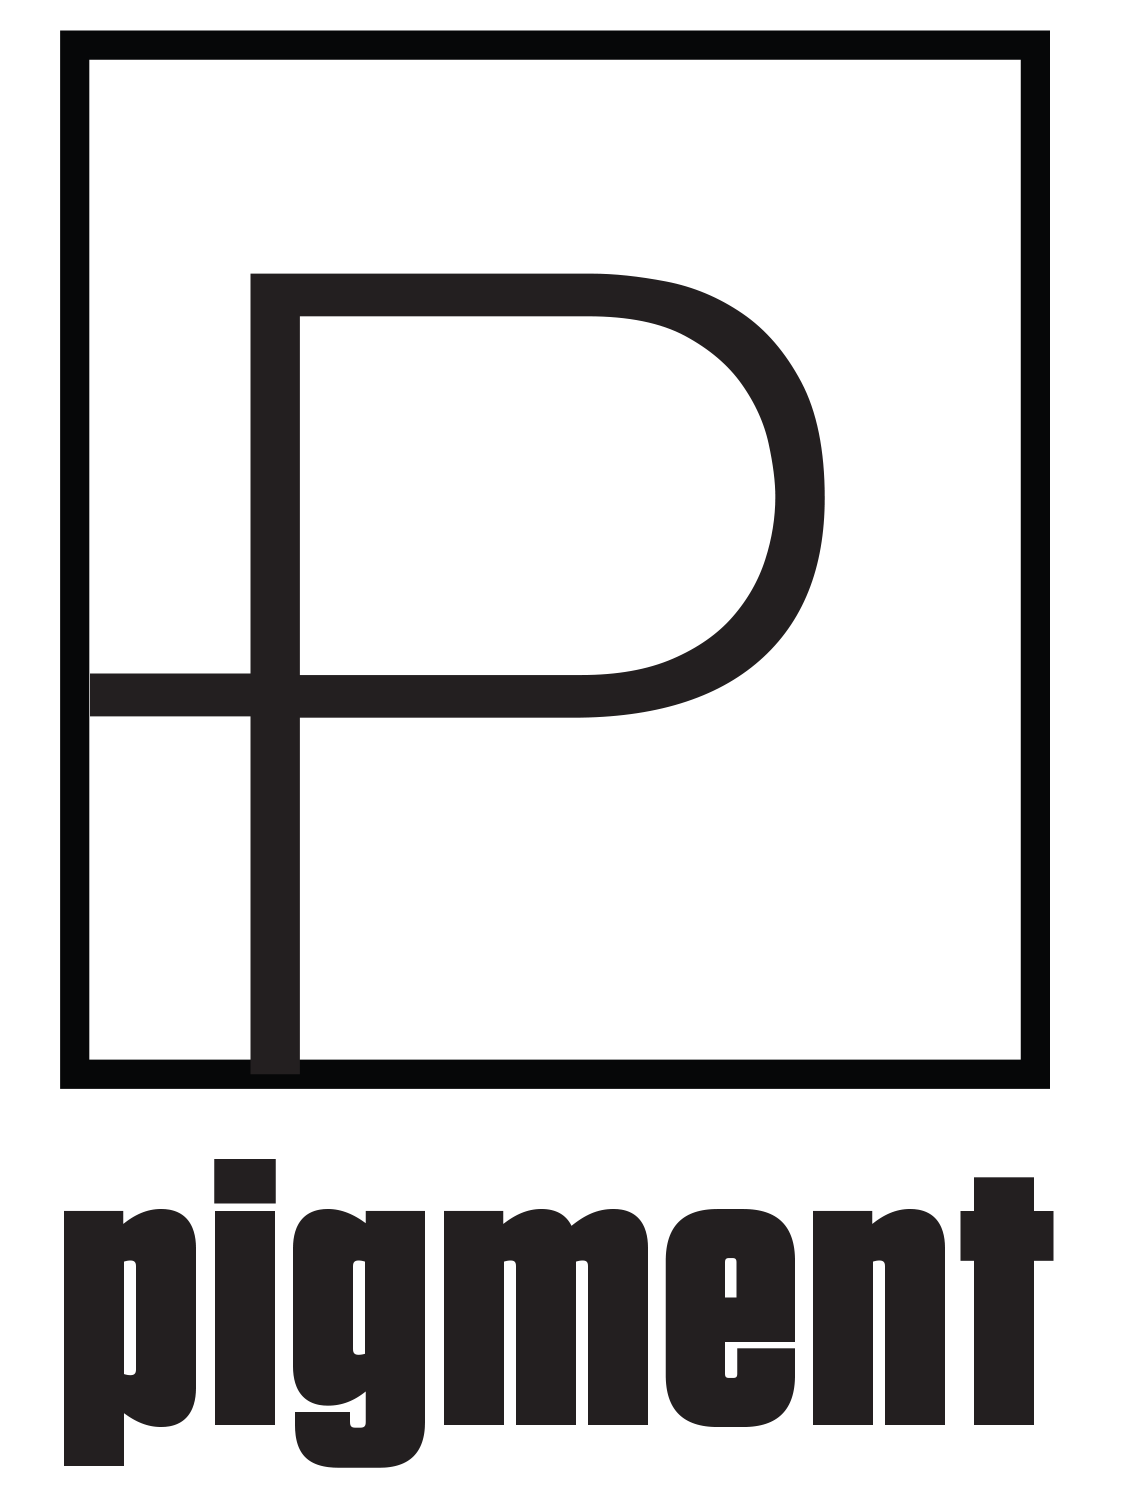 New Pigment Logo1.png